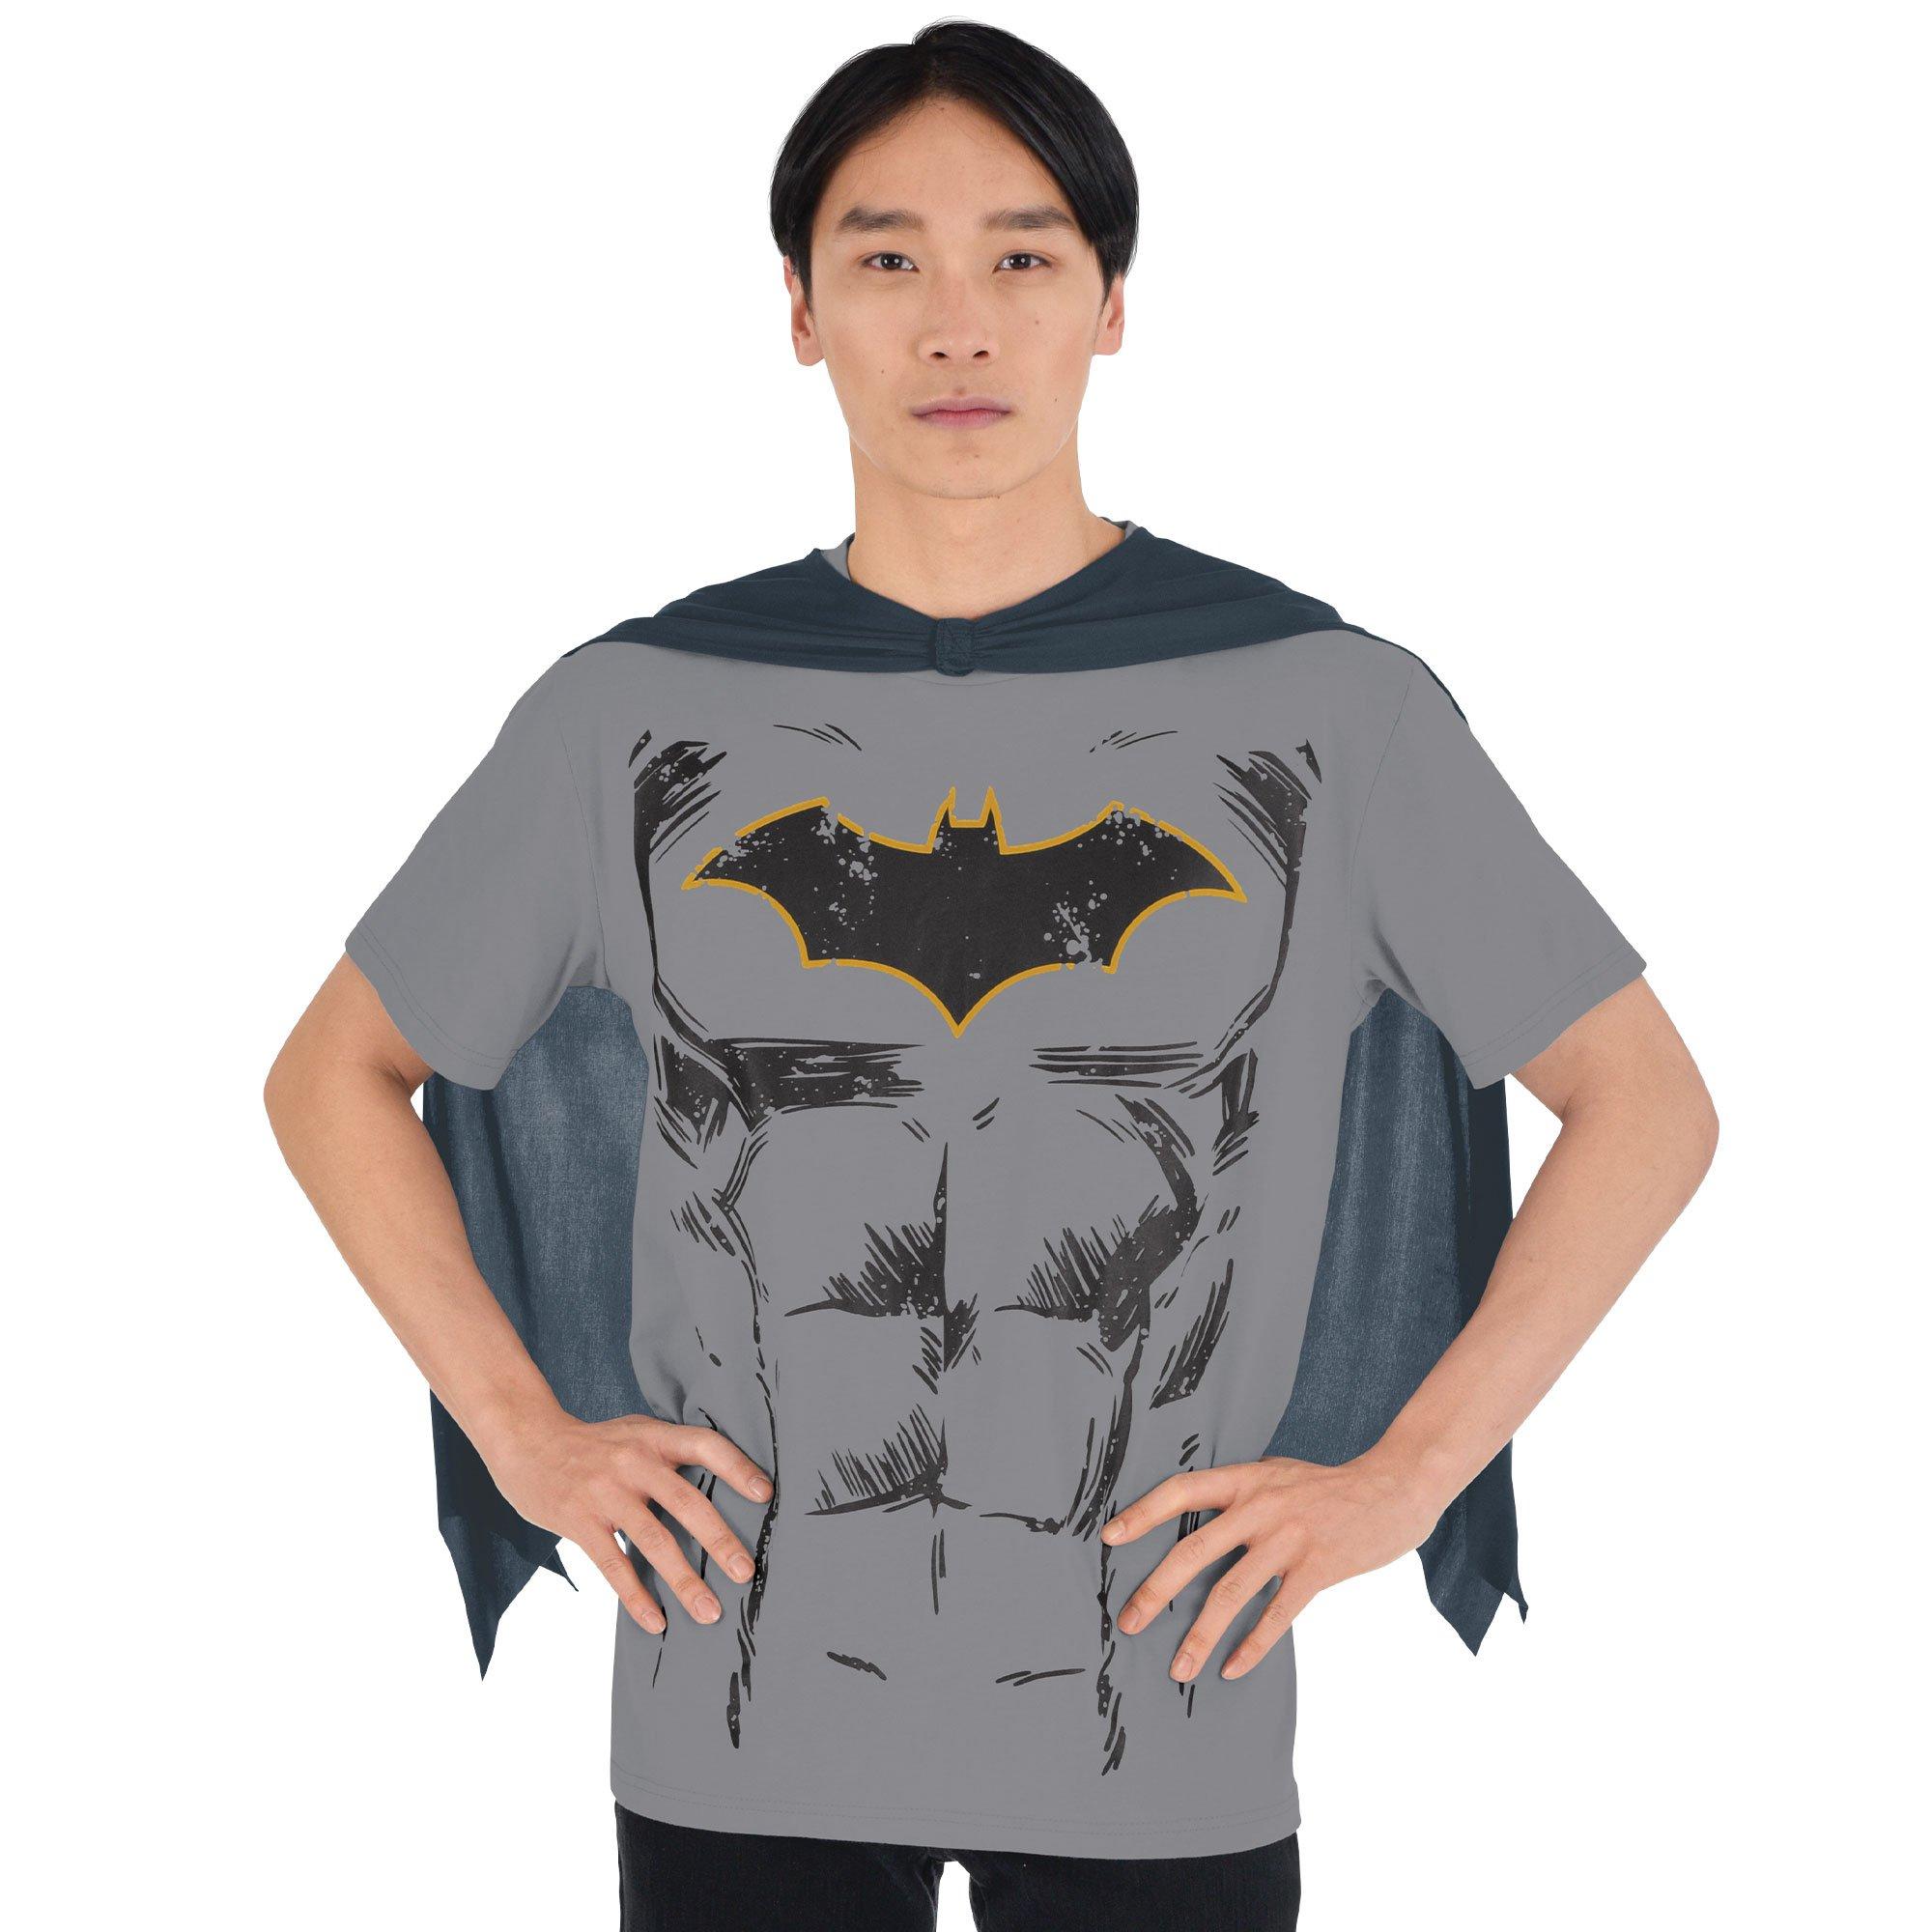 batgirl and batman couple shirts